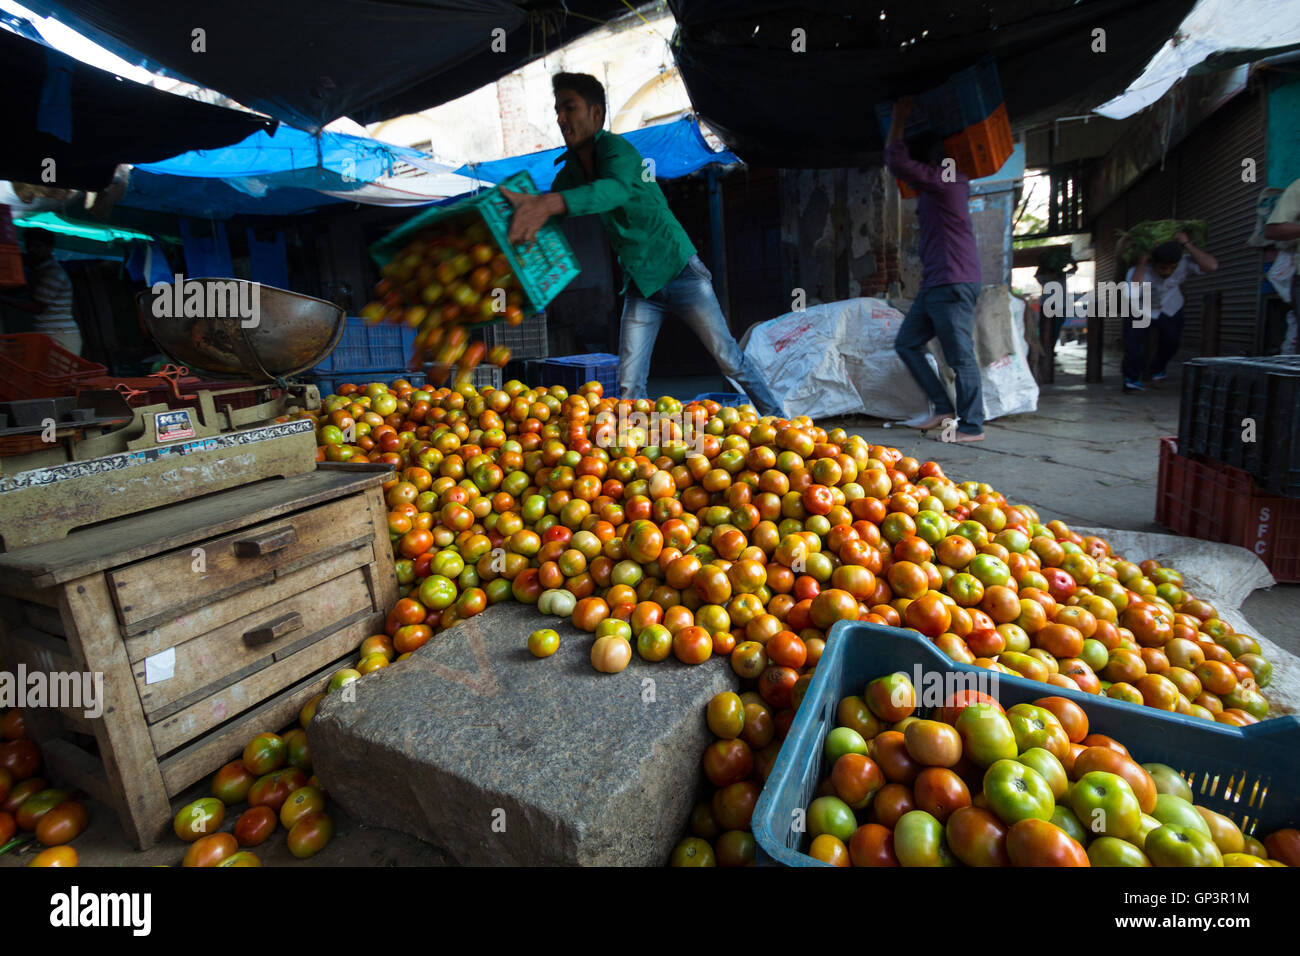 Head load workers unloading veget bags in the Devaraja market in Mysore, India. Unloading tomatoes. Stock Photo